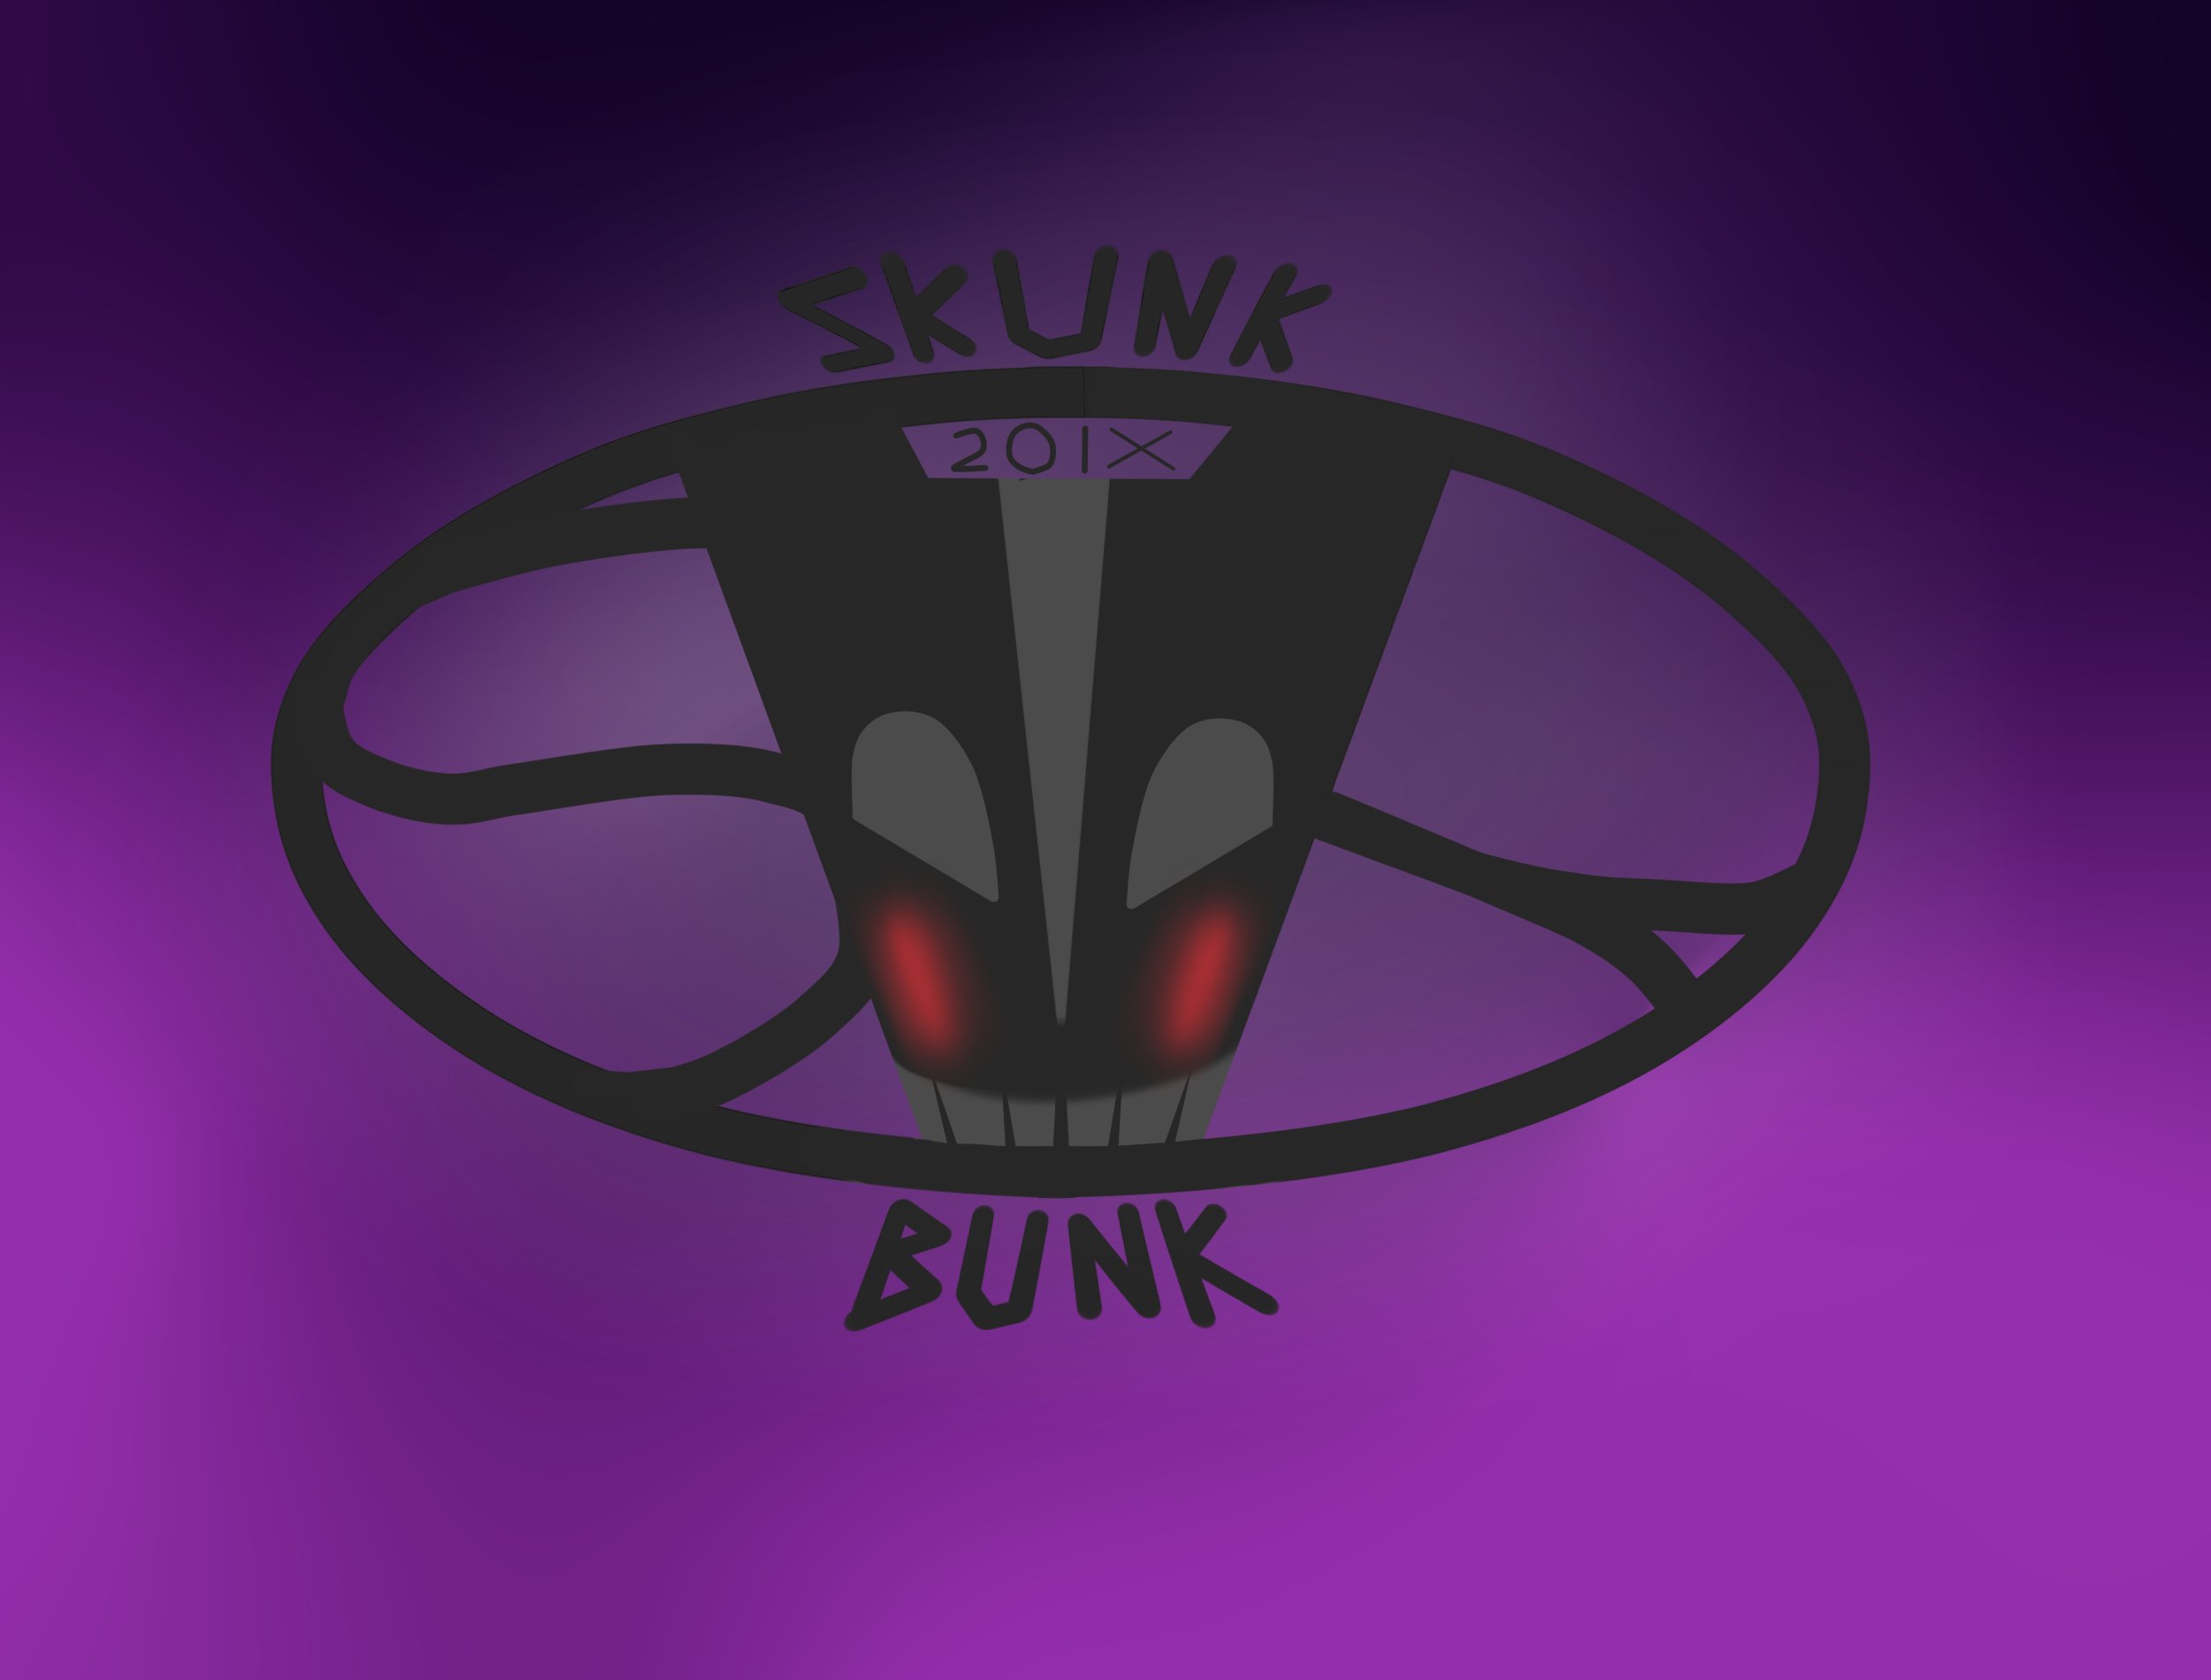 Skunk Bunk 🔞さんのプロフィール画像